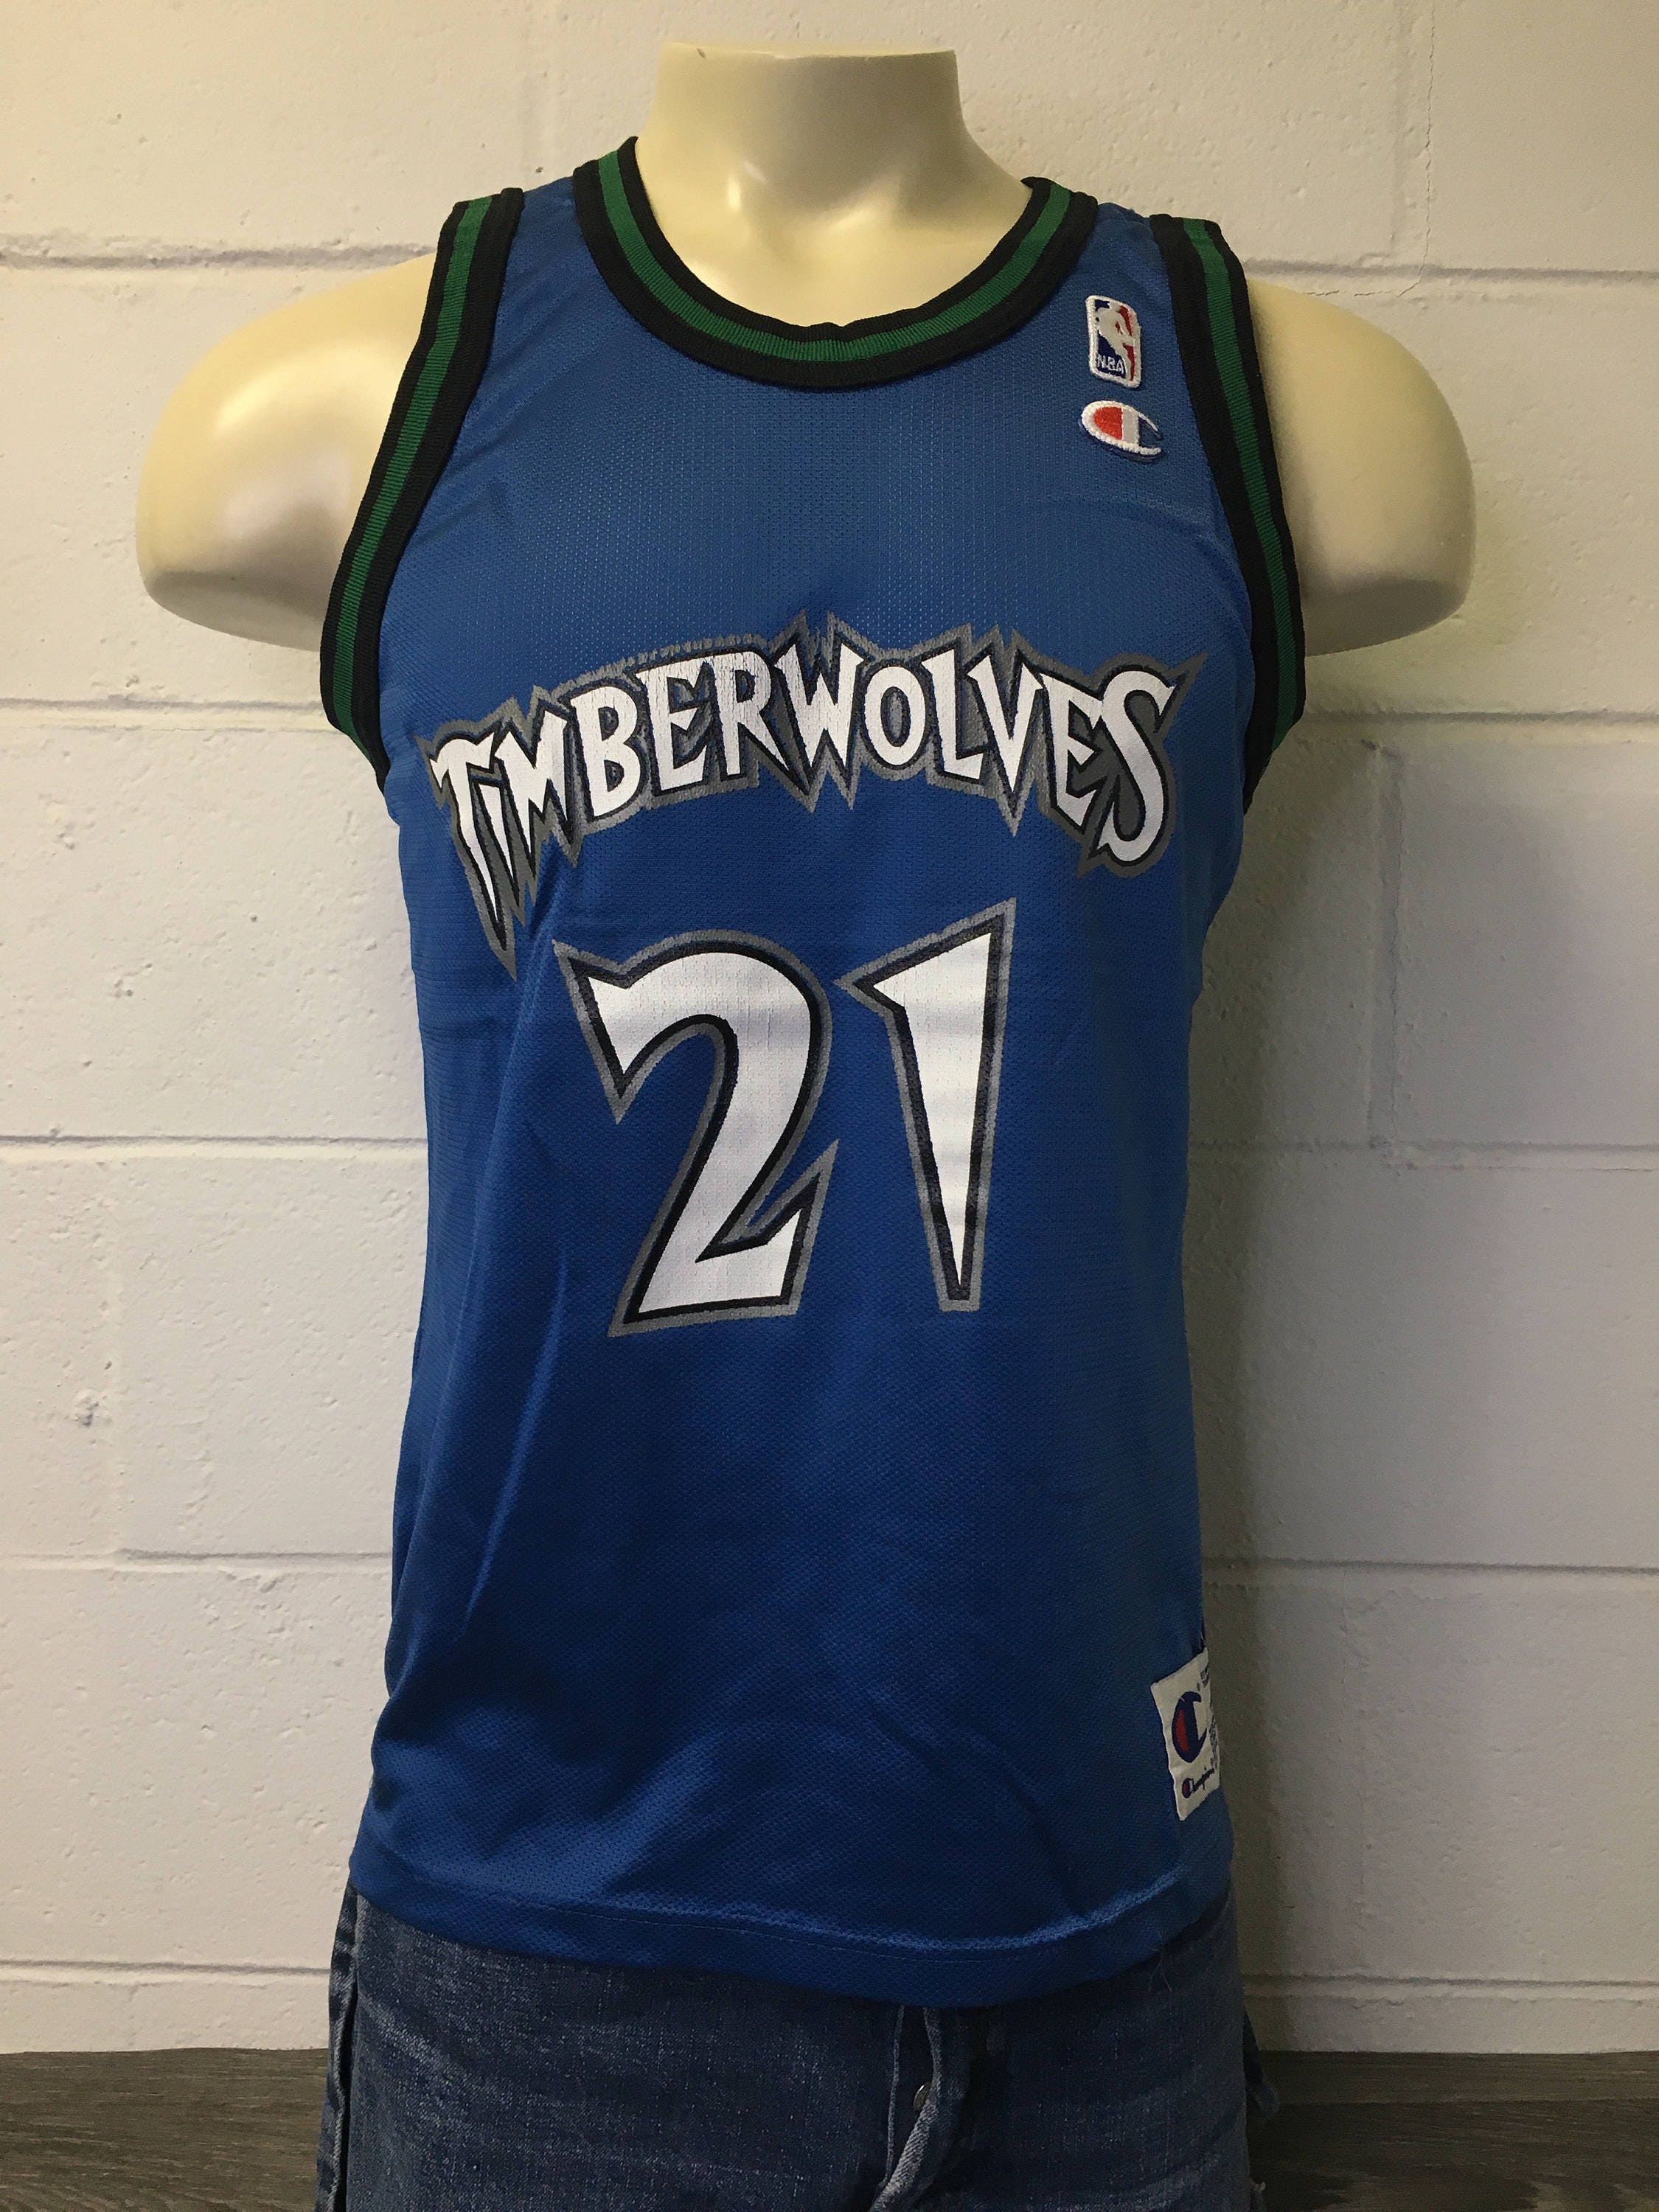 vintage timberwolves jersey